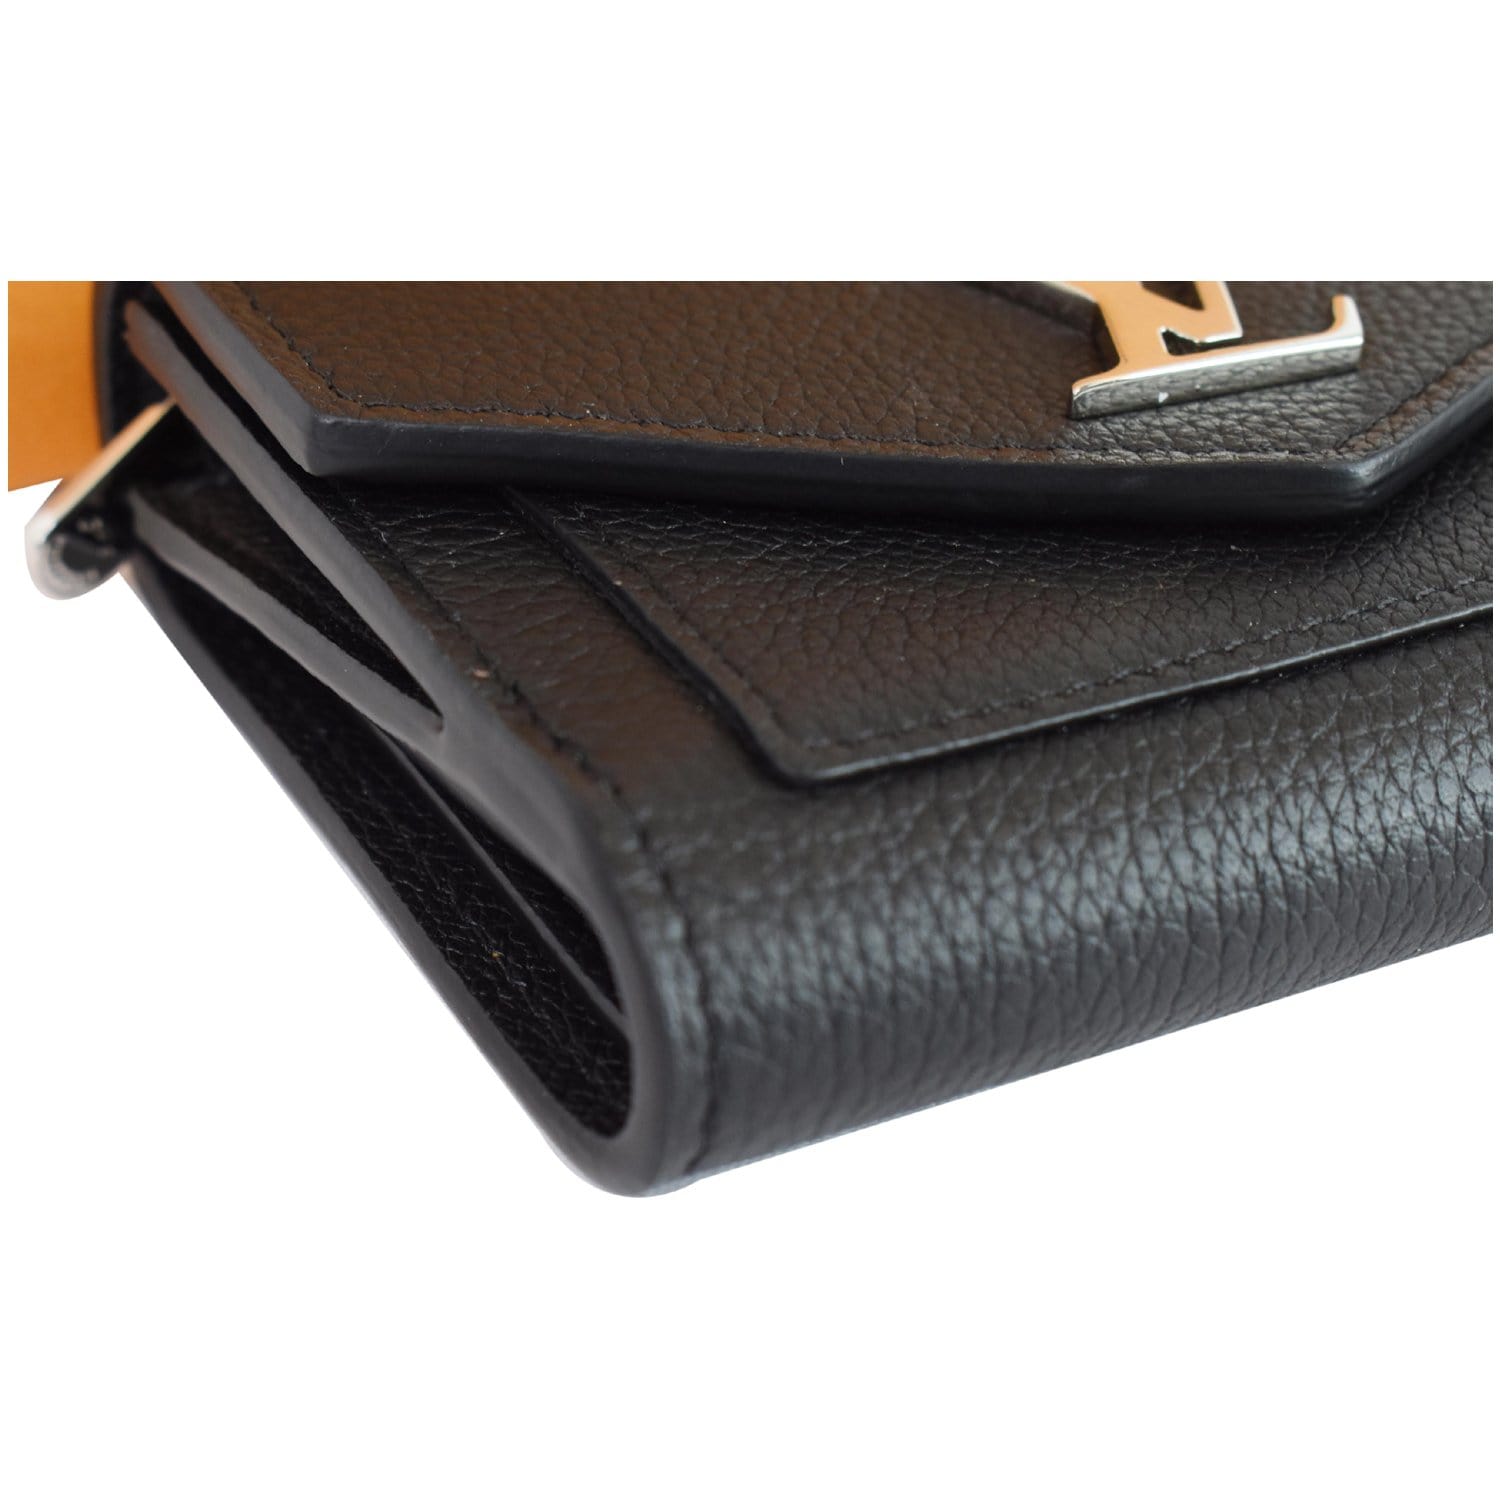 Louis Vuitton Mylockme Wallet Leather Black 49113234